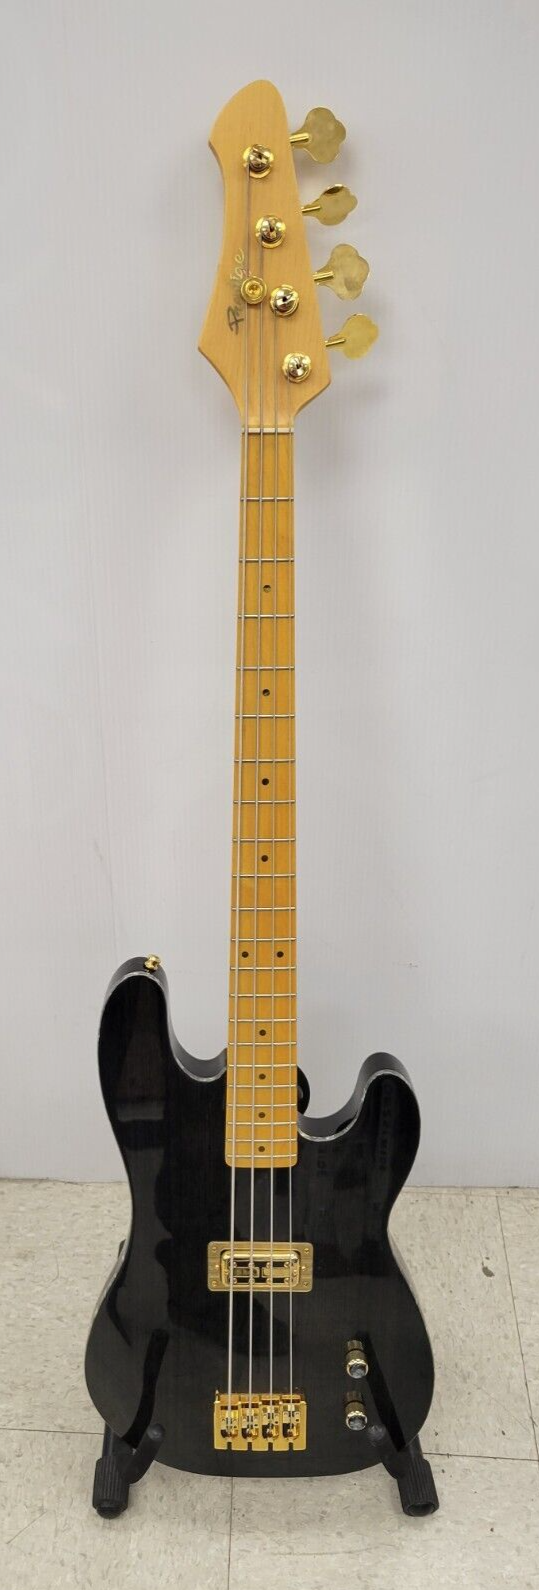 (50563-1) Prestige Bass Guitar